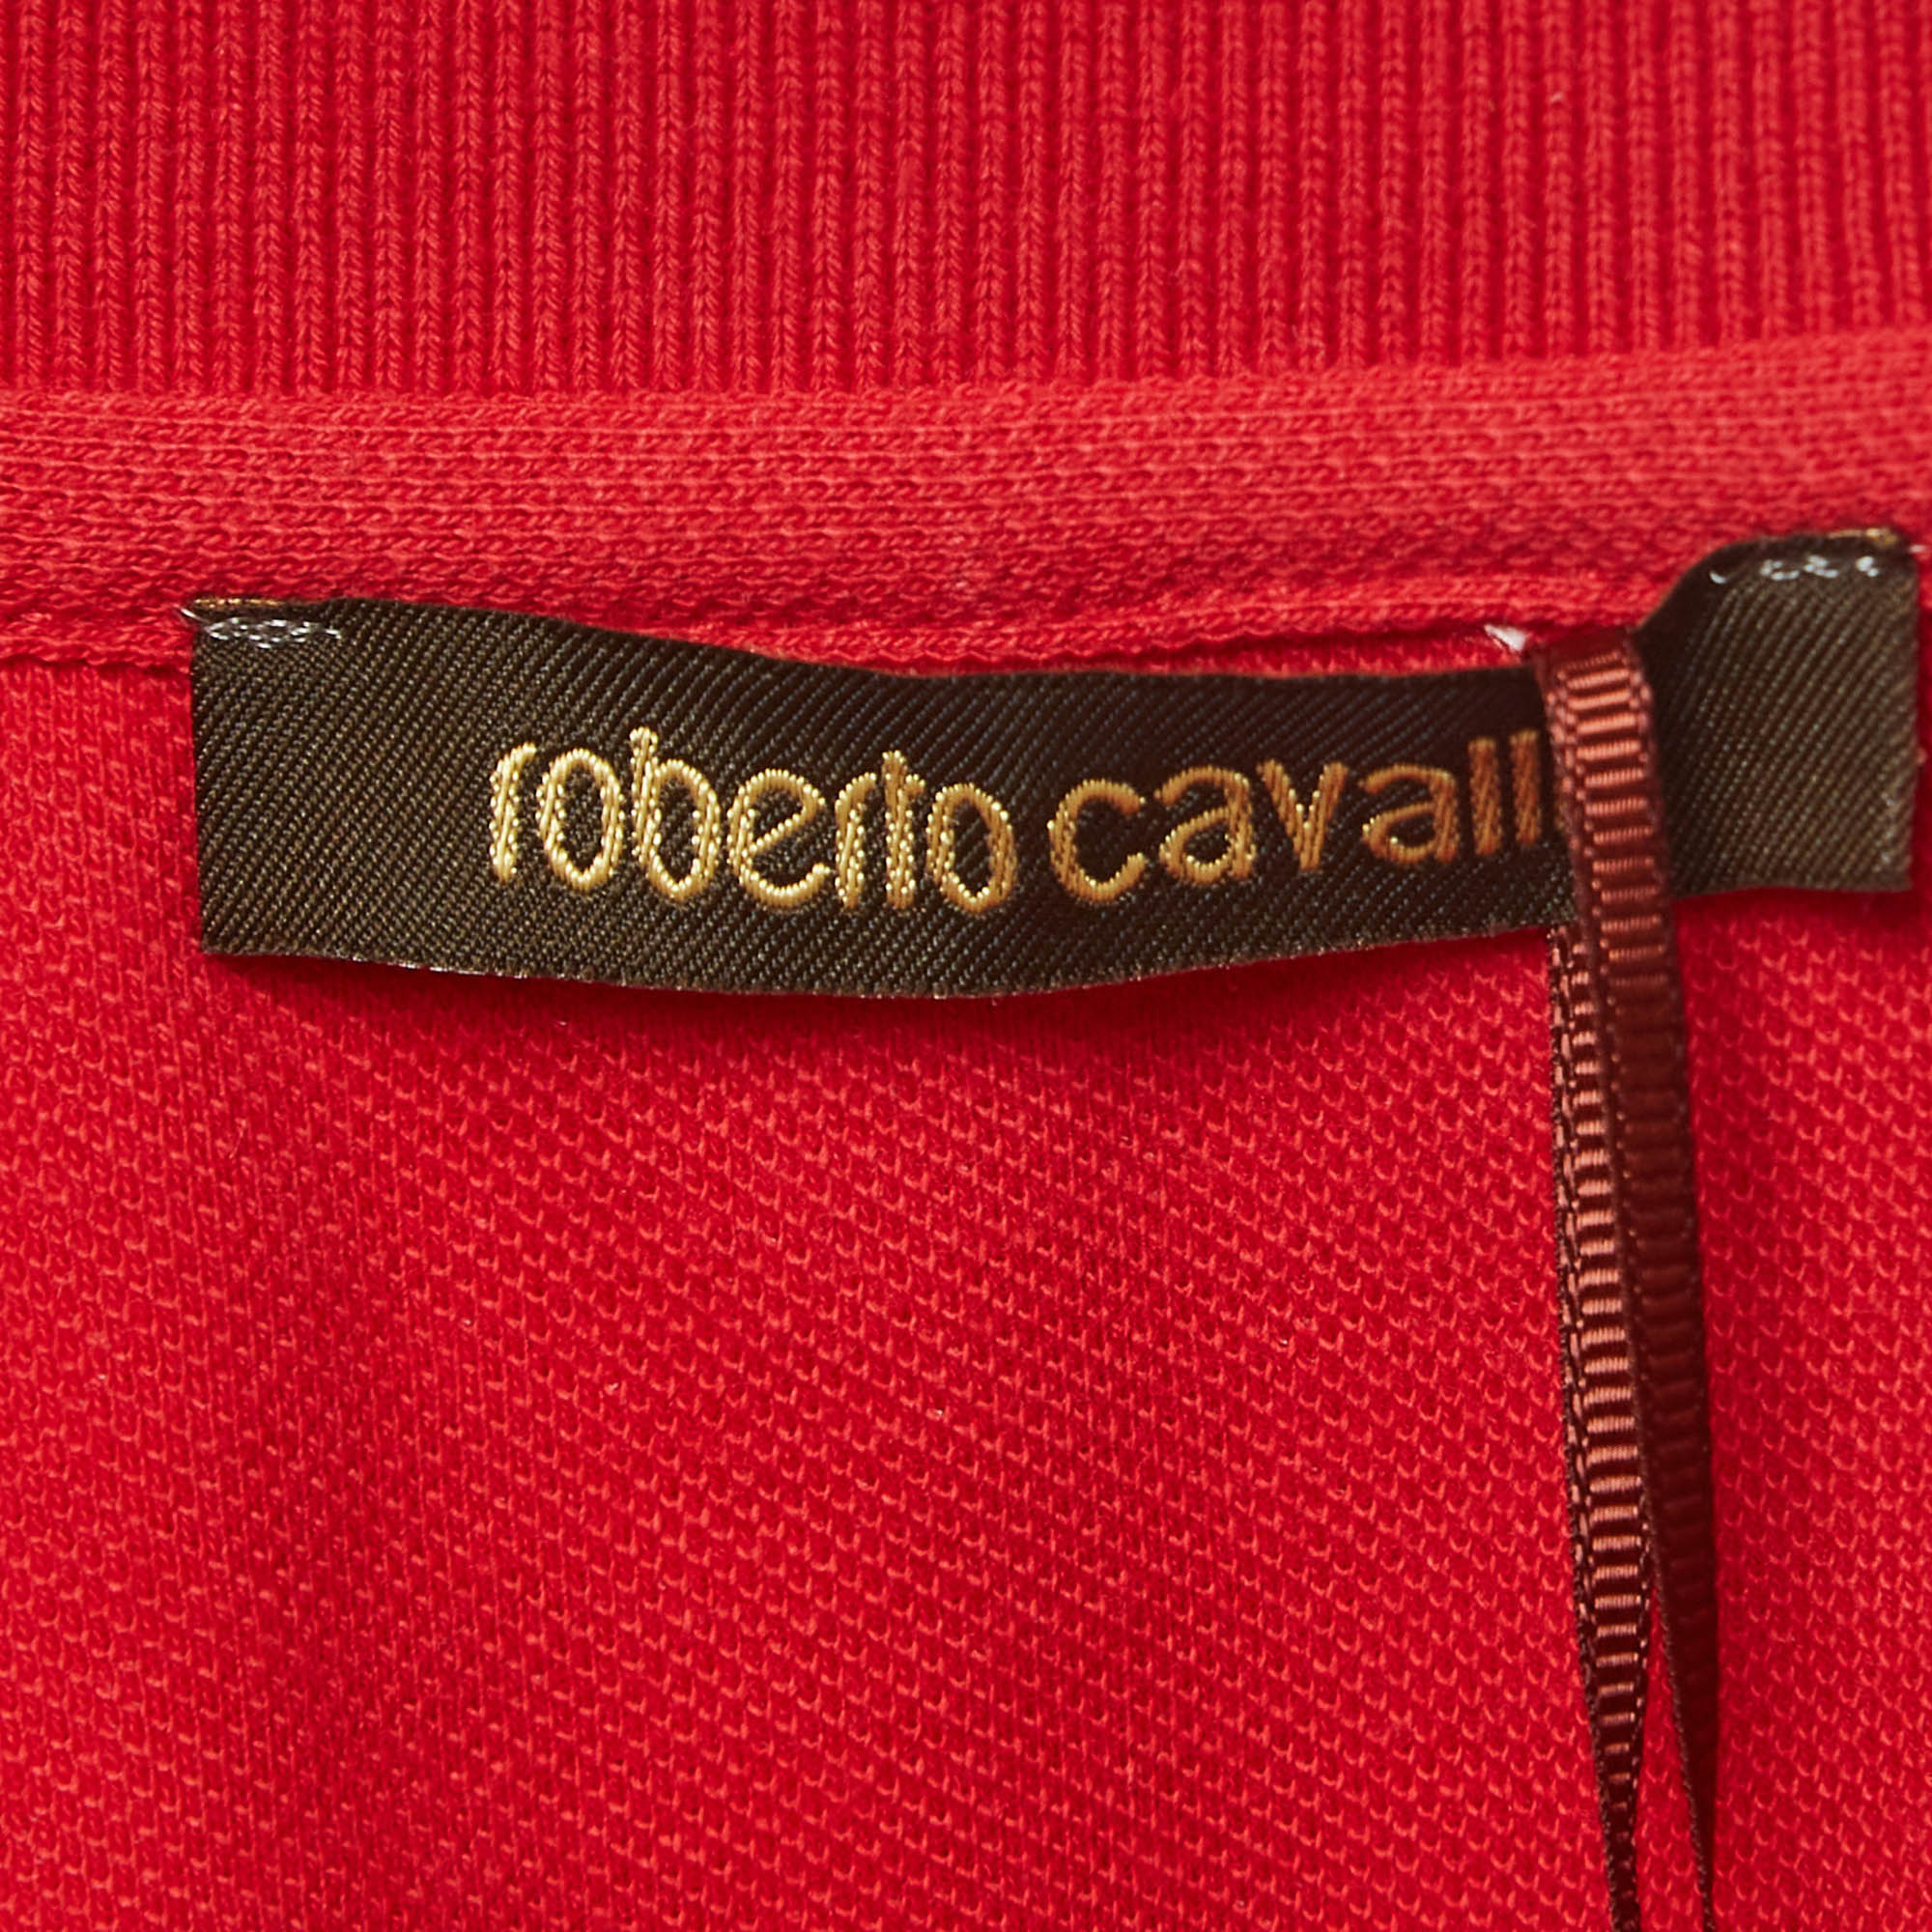 Roberto Cavalli Red Logo Embroidered Cotton Pique Polo T-Shirt M